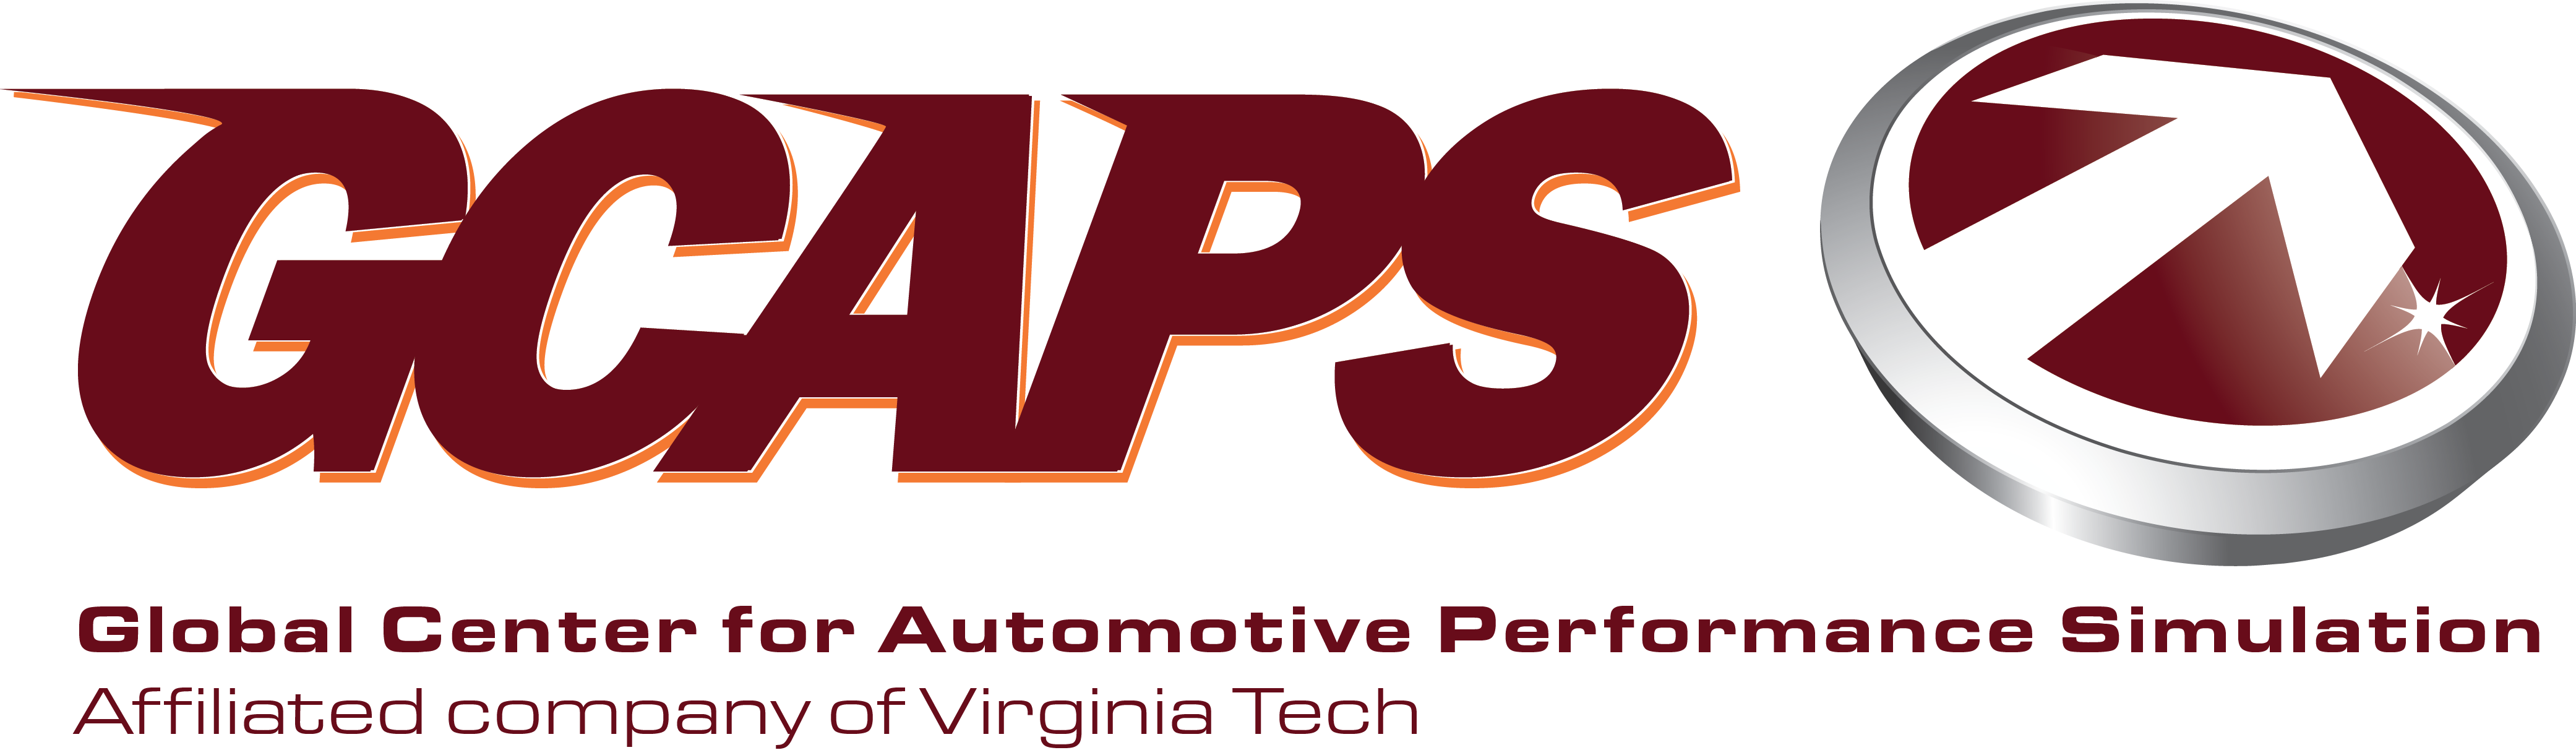 Global Center for Automotive Performance Simulation logo